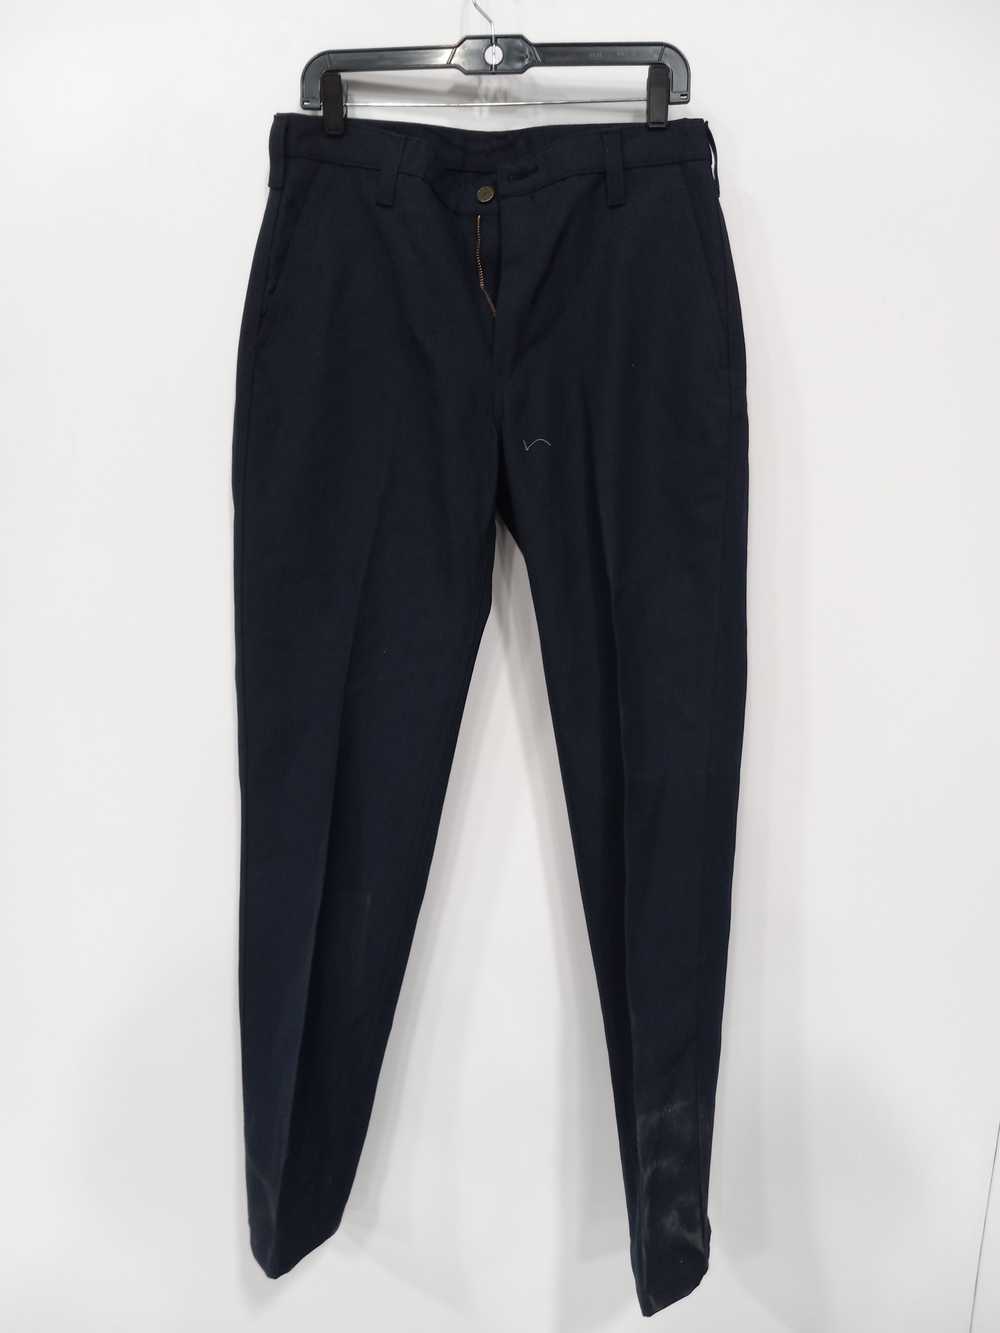 Workrite Flame Resistant Pants Men's Size 32x33 - image 5